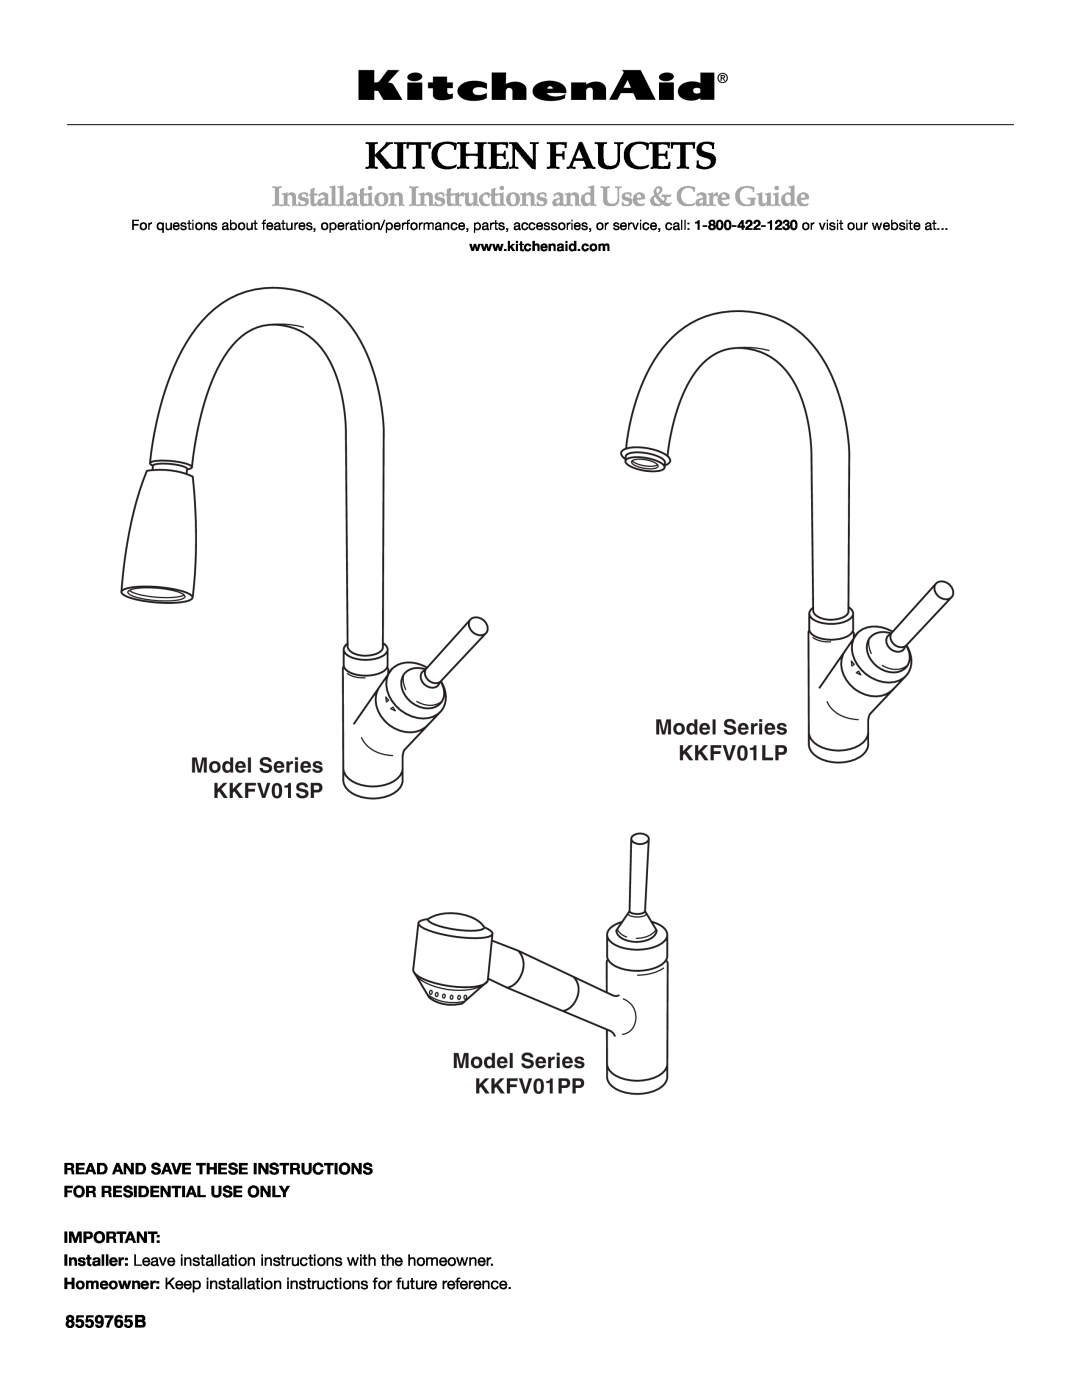 KitchenAid KKFV01LP Series installation instructions 8559765B, Kitchen Faucets, InstallationInstructionsandUse&CareGuide 